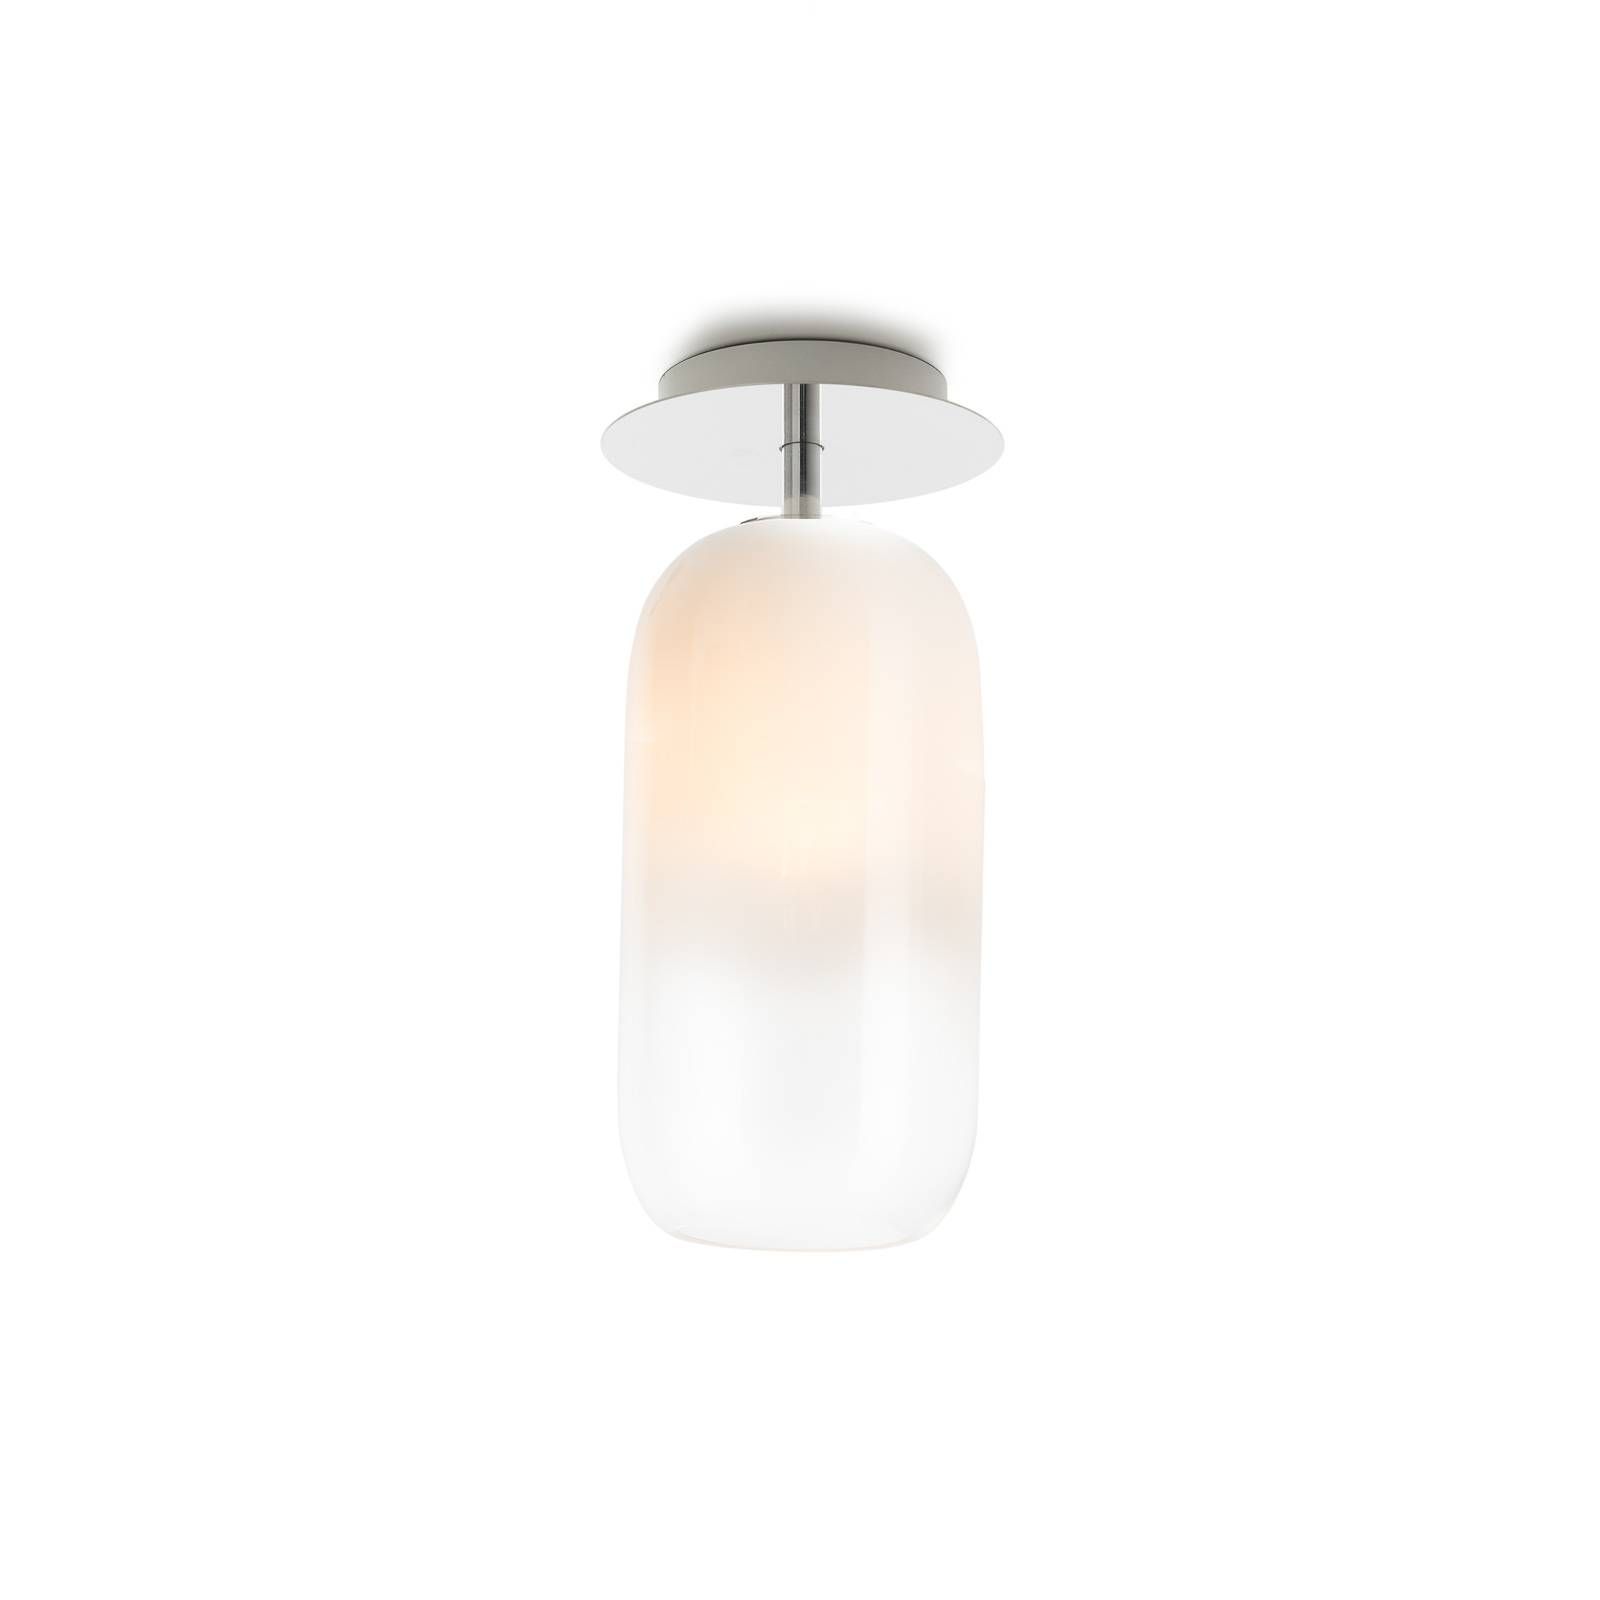 Artemide Gople Mini stropná lampa biela, Obývacia izba / jedáleň, hliník, sklo, E14, 6W, K: 35cm